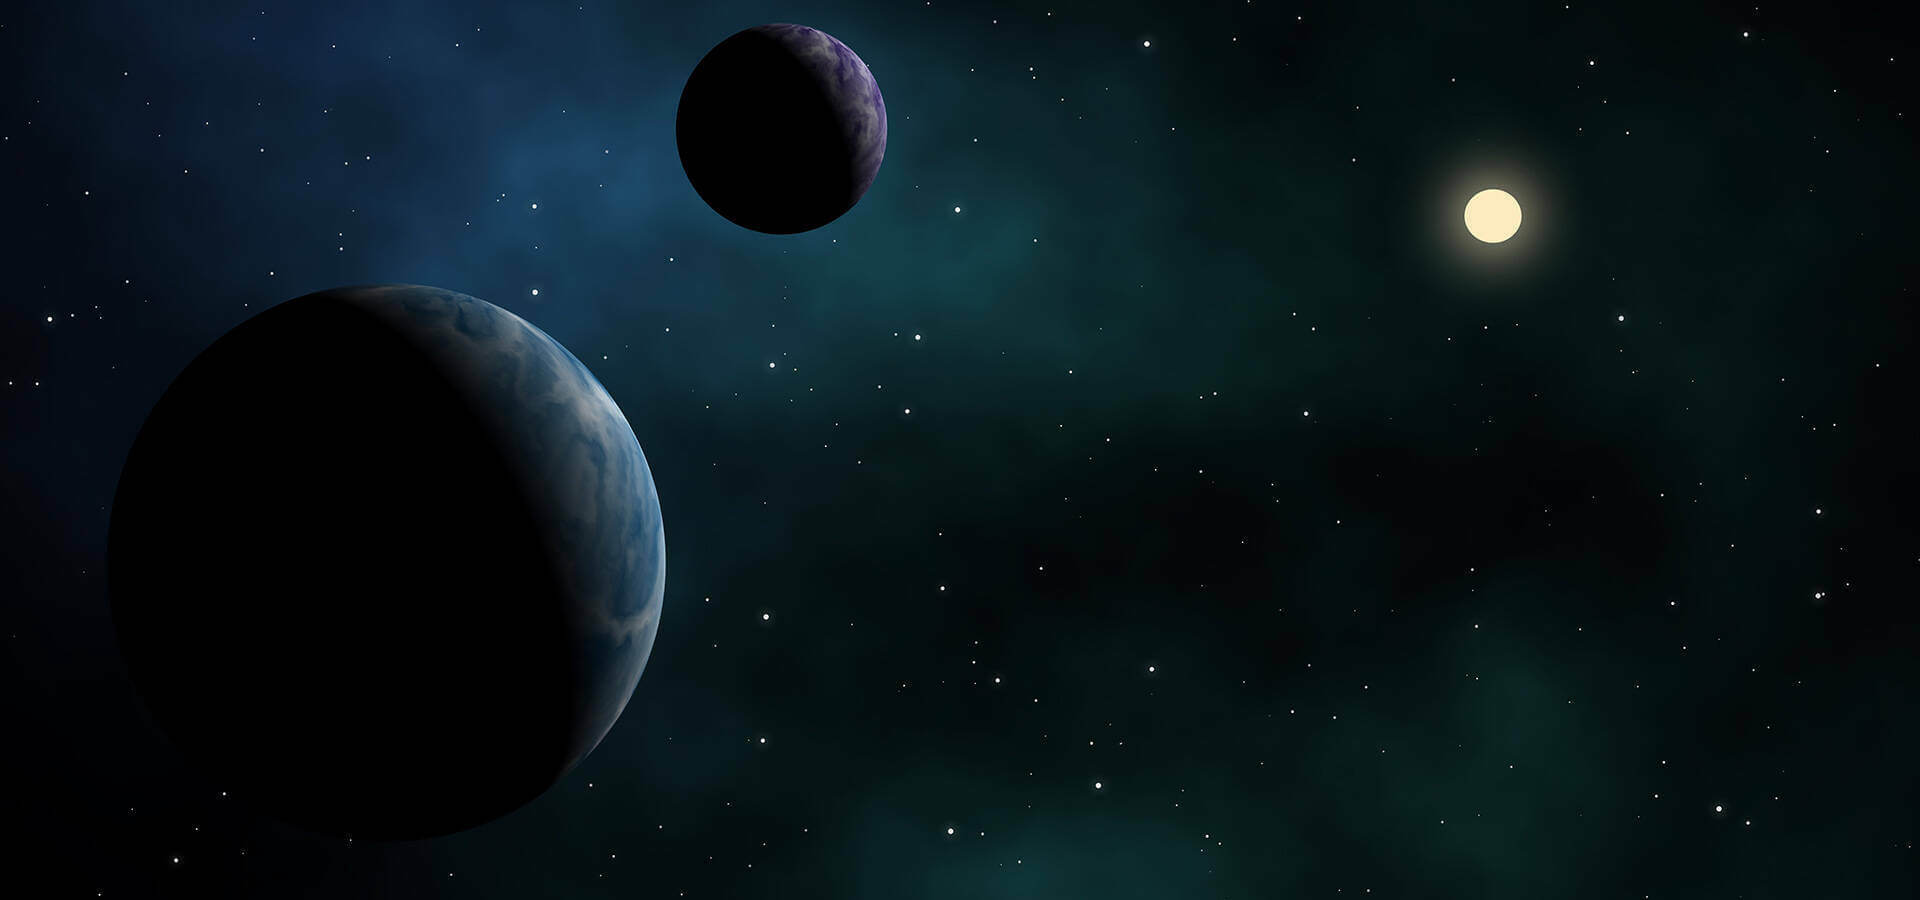 Artist rendering of exoplanets